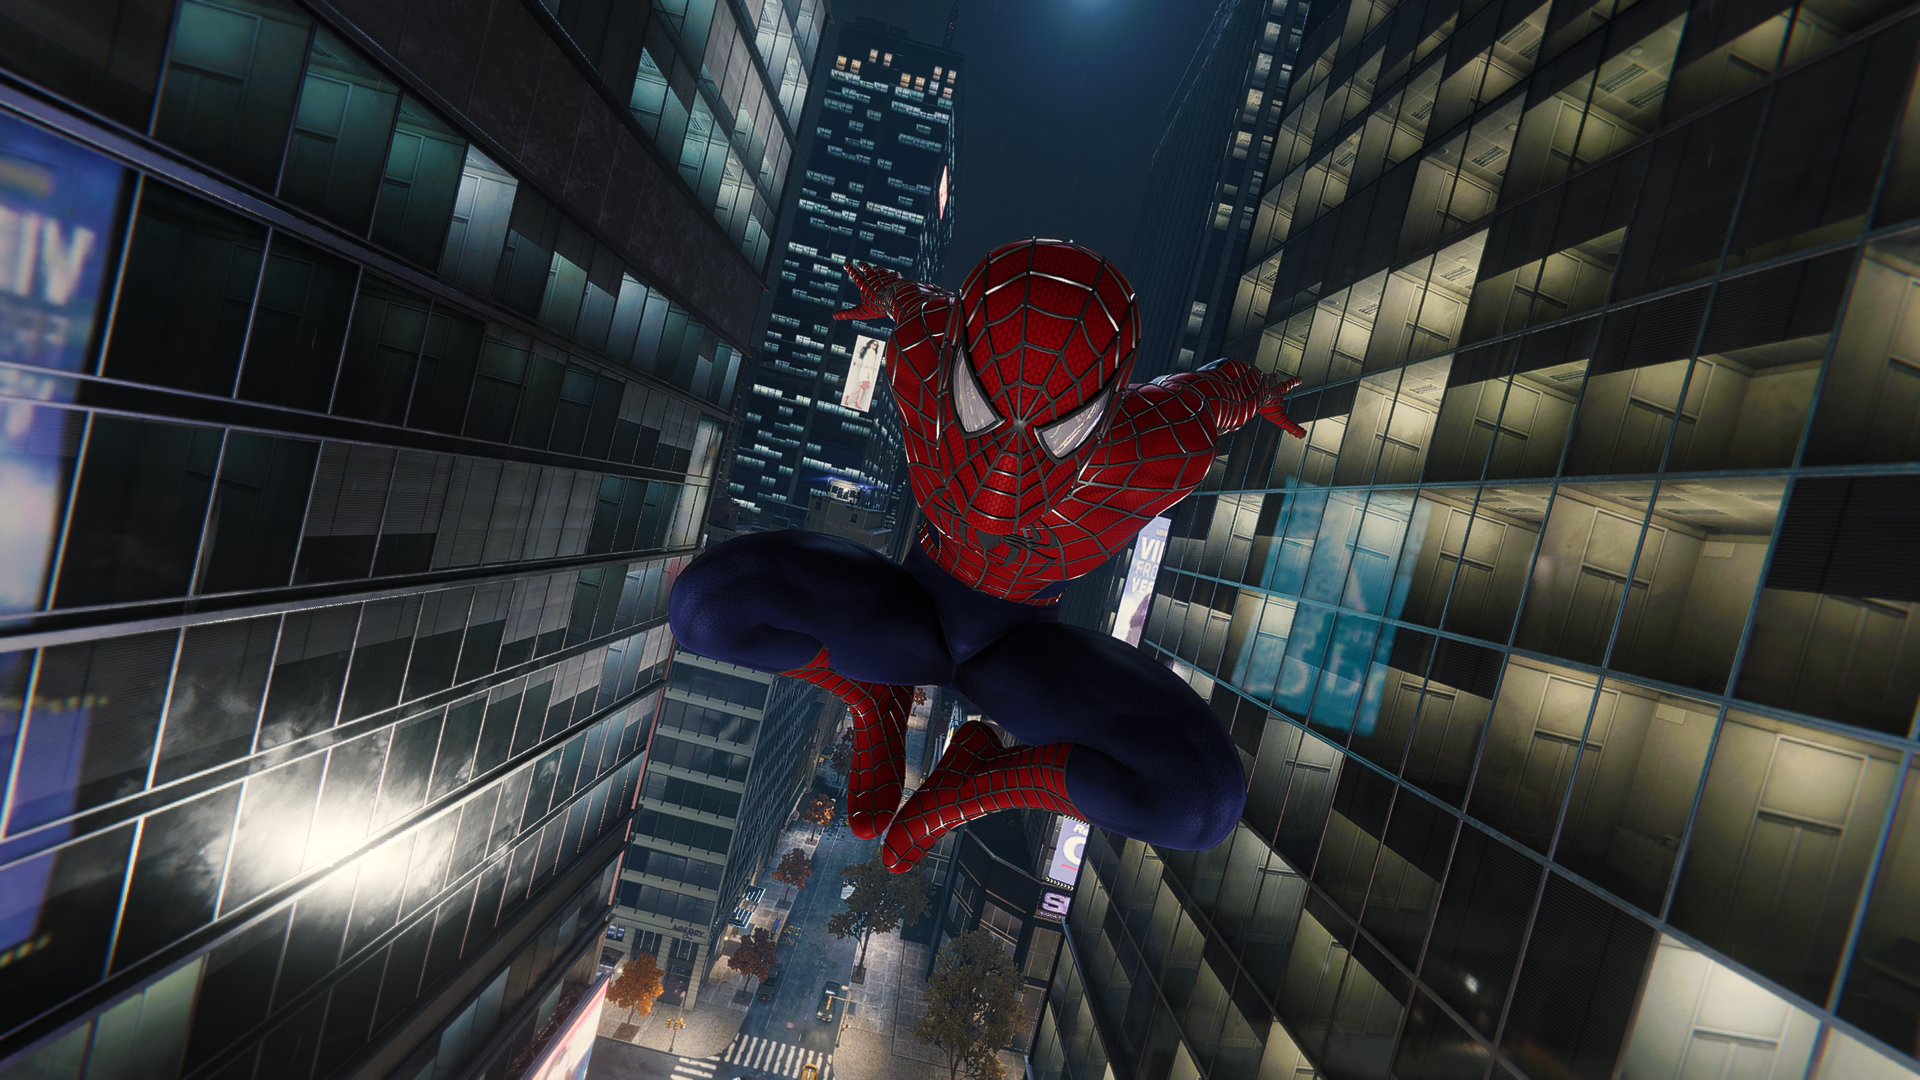 Spider Man Spider Man 2018 Marvel Comics PlayStation Superhero Bodysuit City Night Building 1920x1080